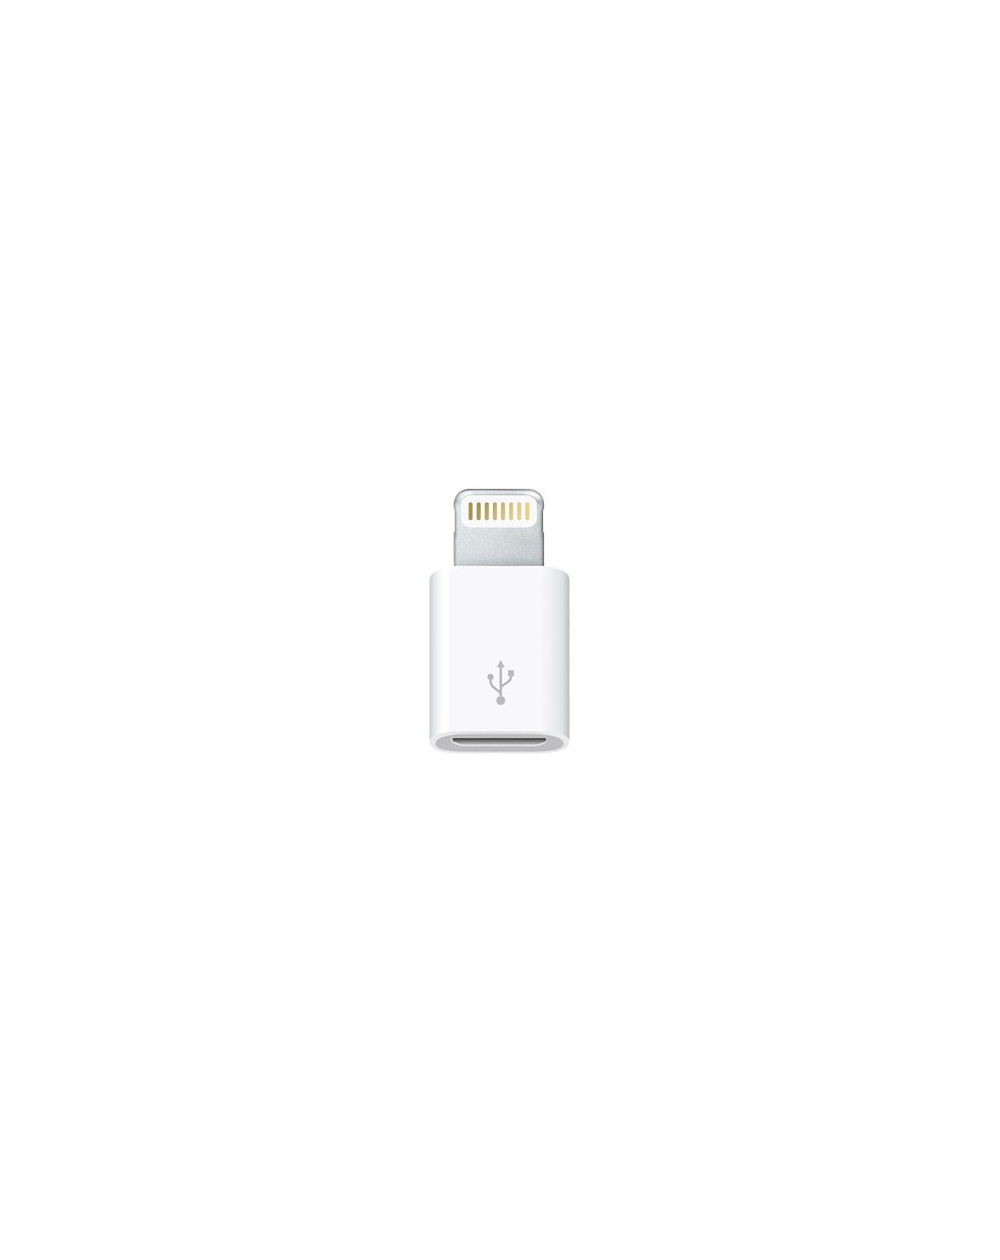 Adattatore Lightning Apple a Micro-USB - C&C Shop